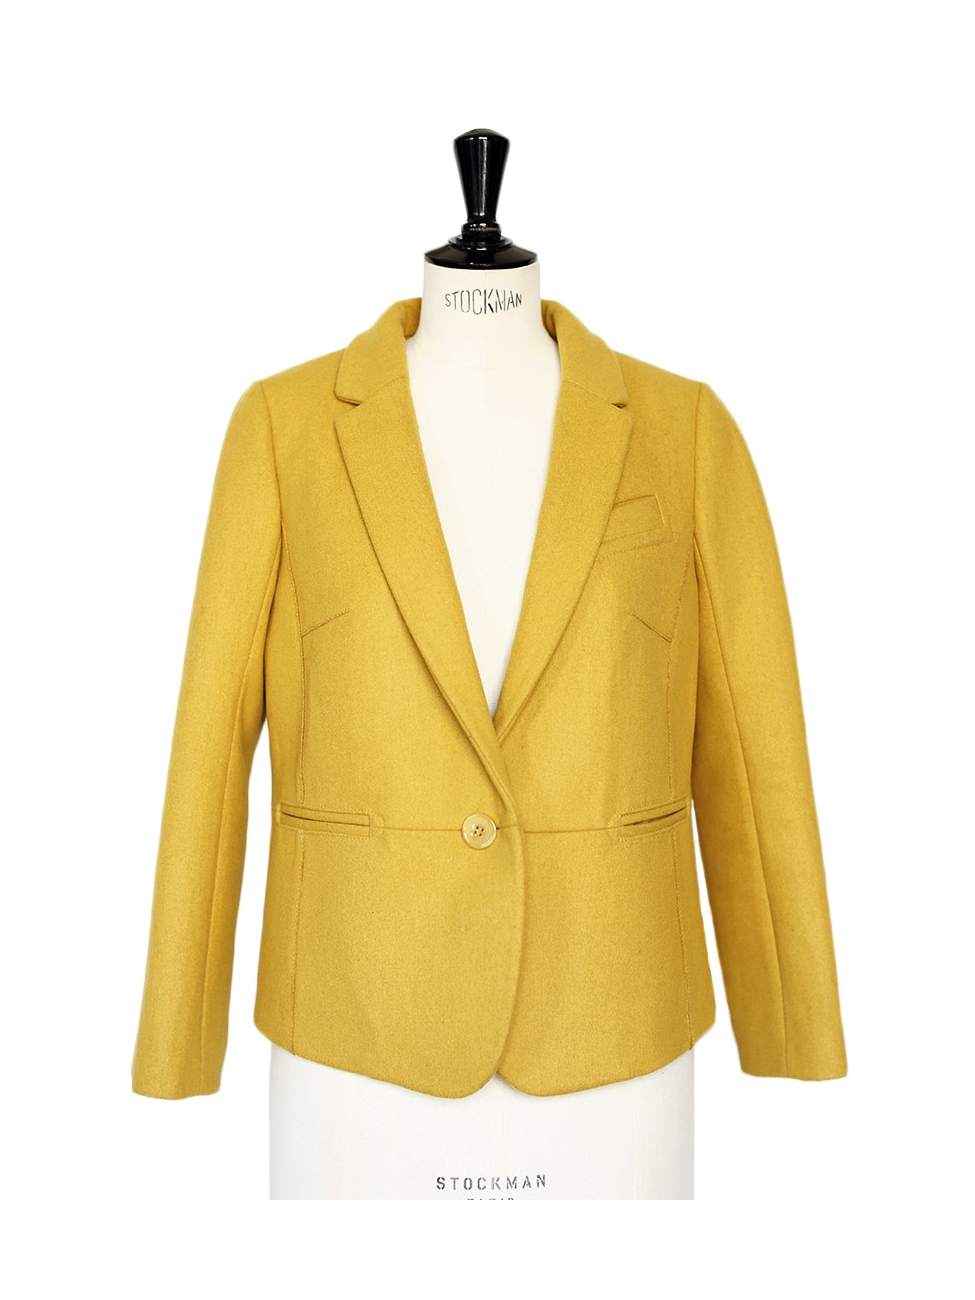 Boutique CARVEN Mustard yellow wool blazer jacket NEW Retail price €430  Size 38